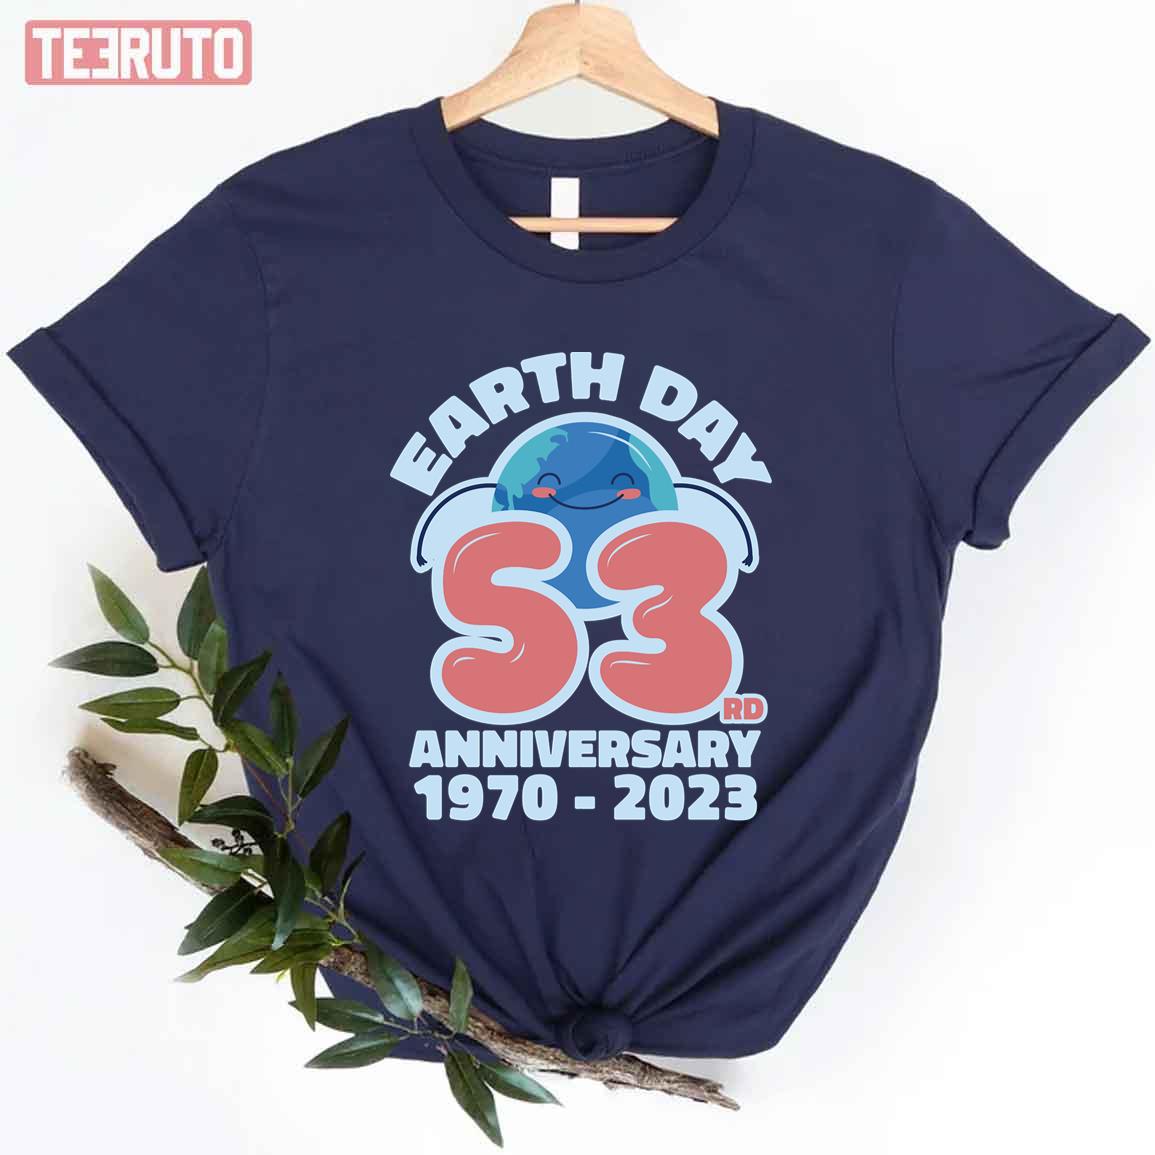 Earth Day 53rd Anniversary 2023 Unisex T-shirt